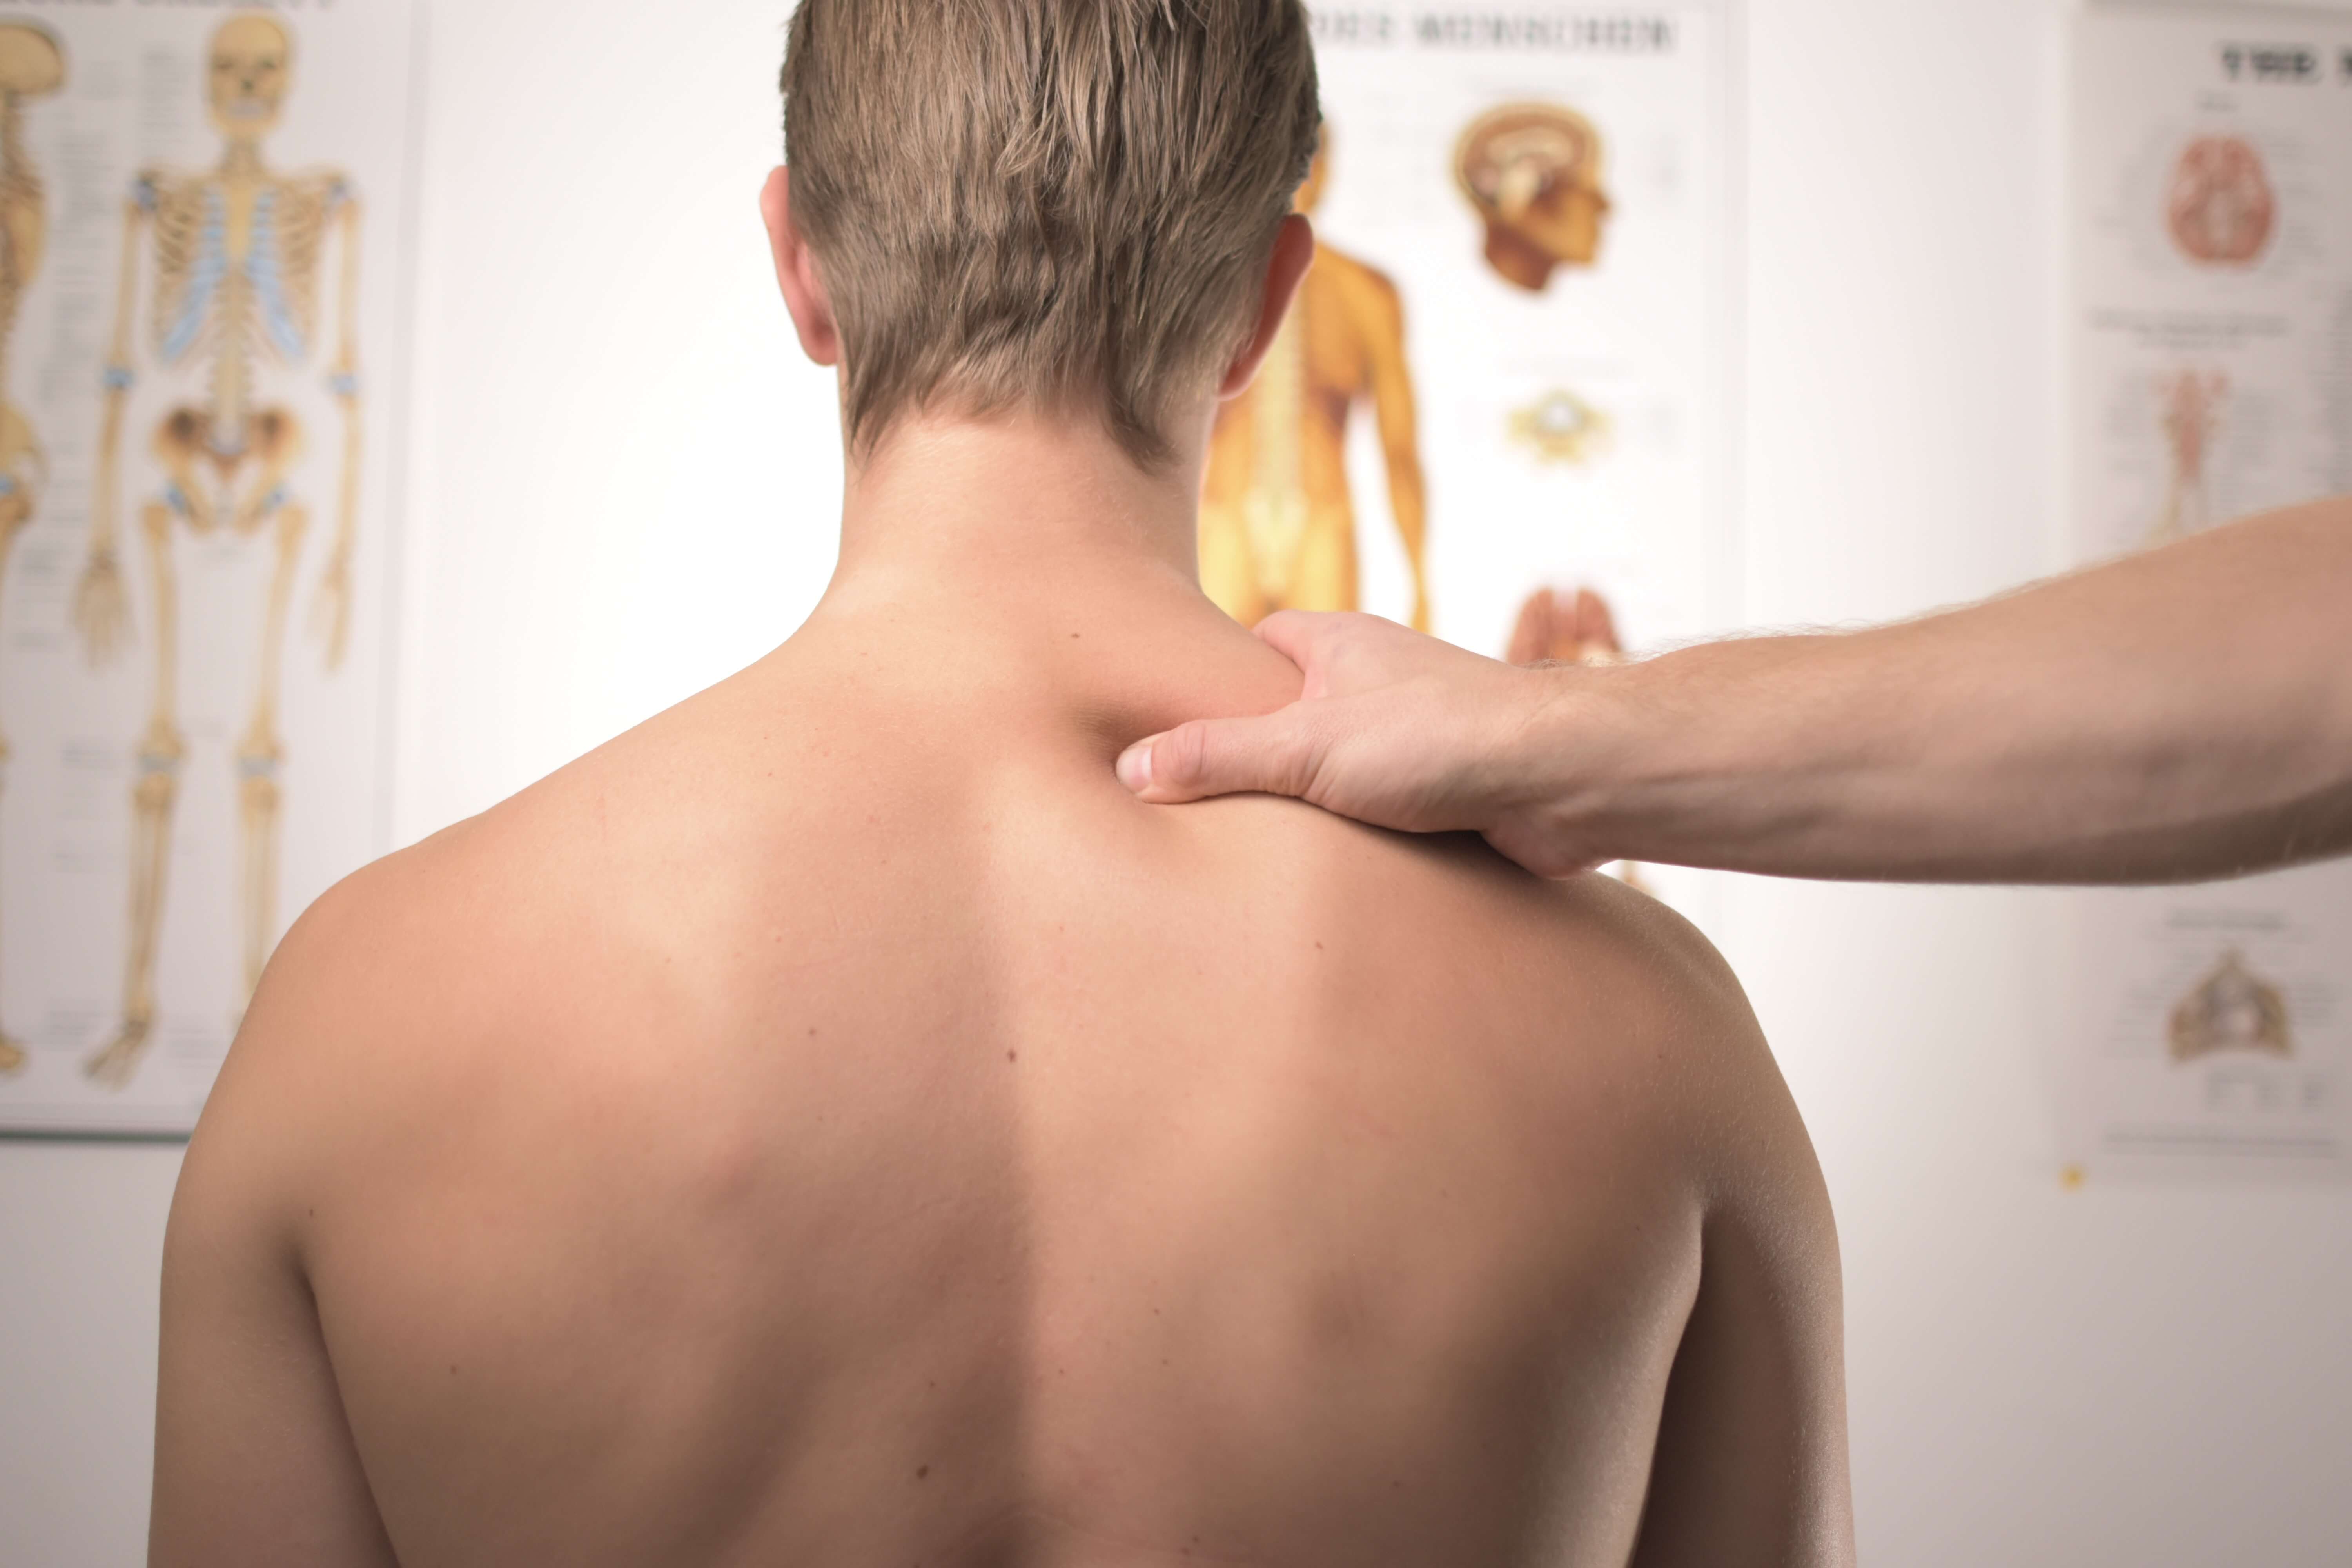 Treatment for Neck Pain, Sutton Osteopath